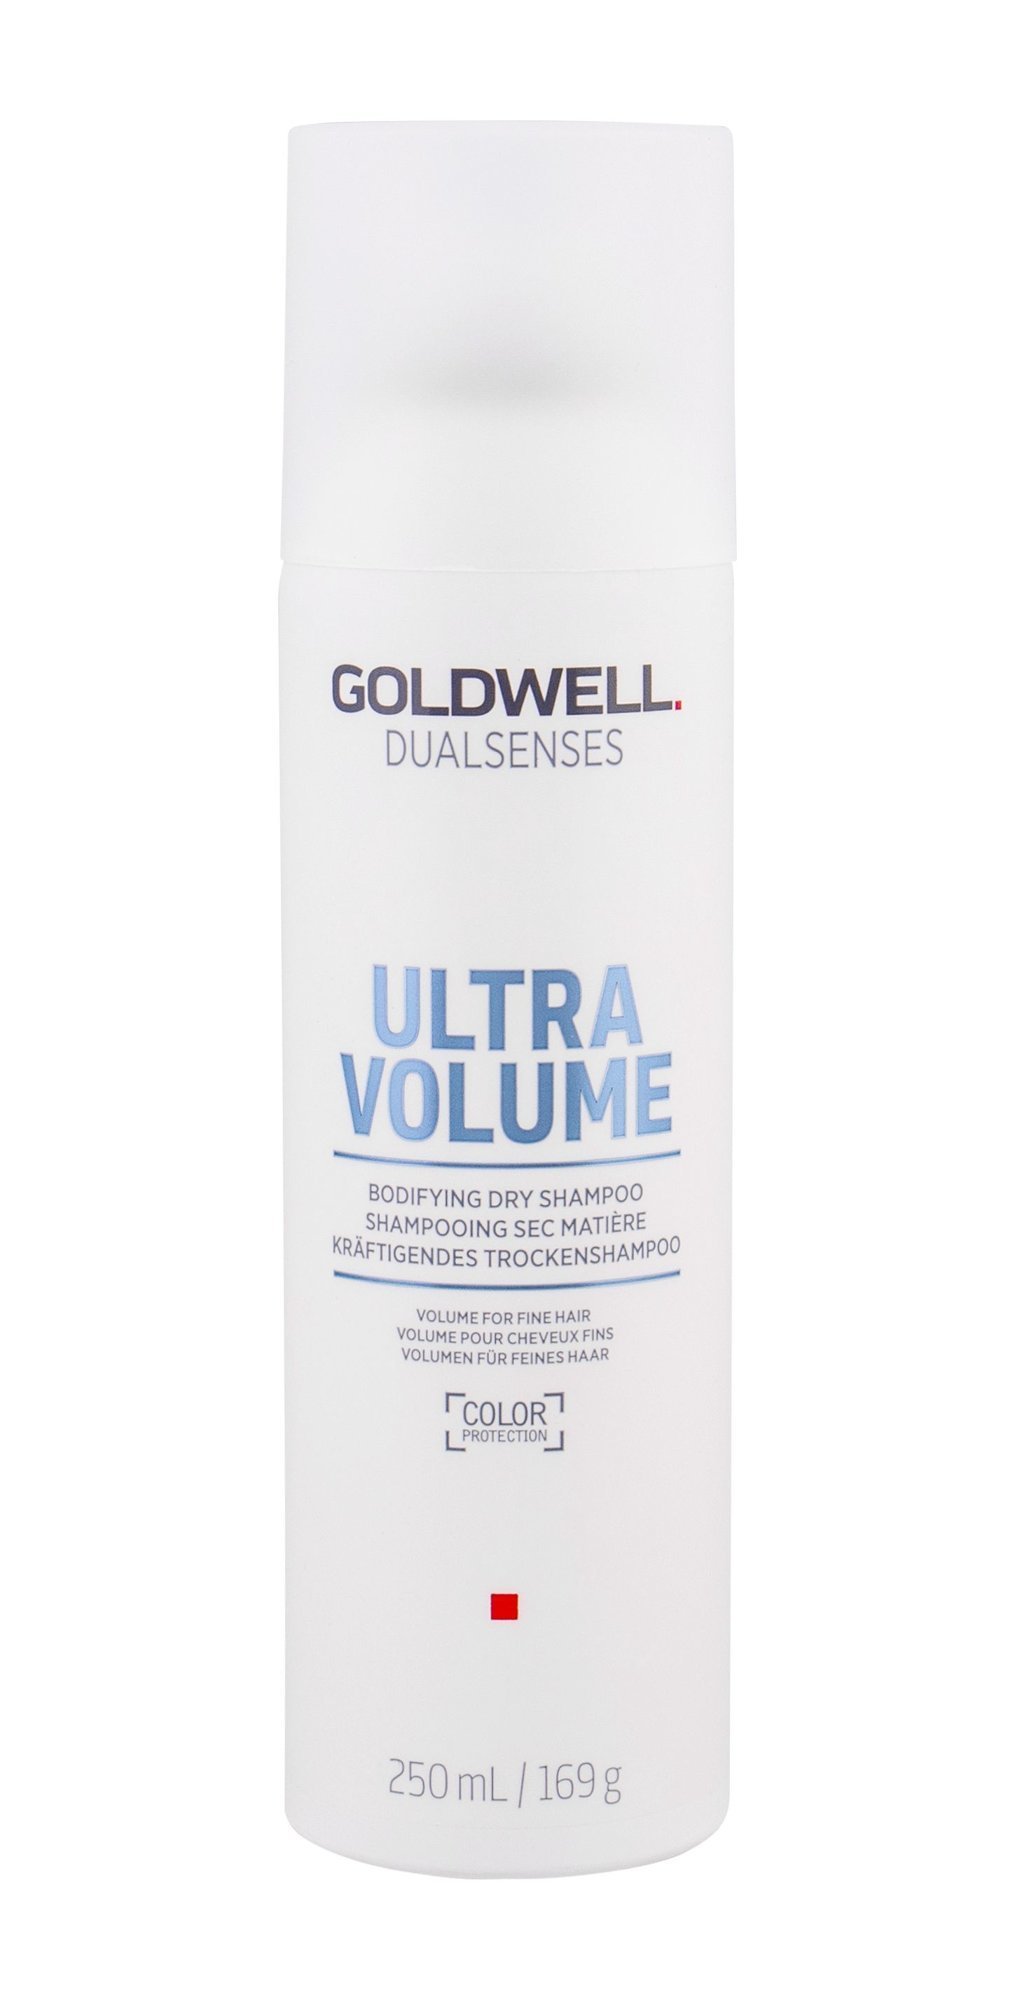 Шампунь сухой для придания свежести укладке - Goldwell Dualscences Ultra Volume Bodifying Dry Shampoo